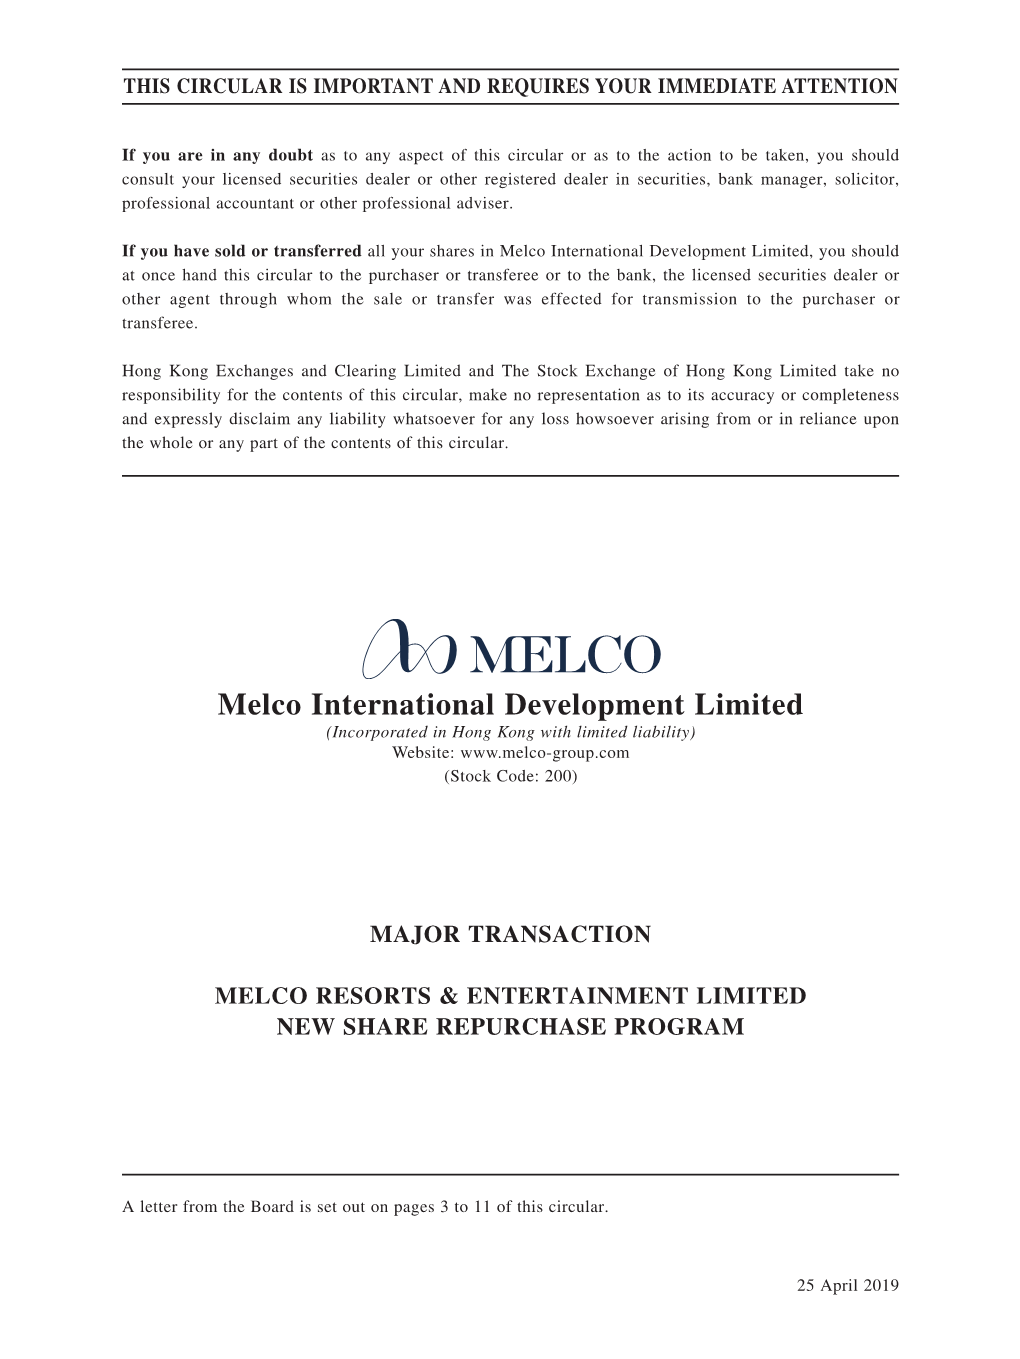 Melco International Development Limited